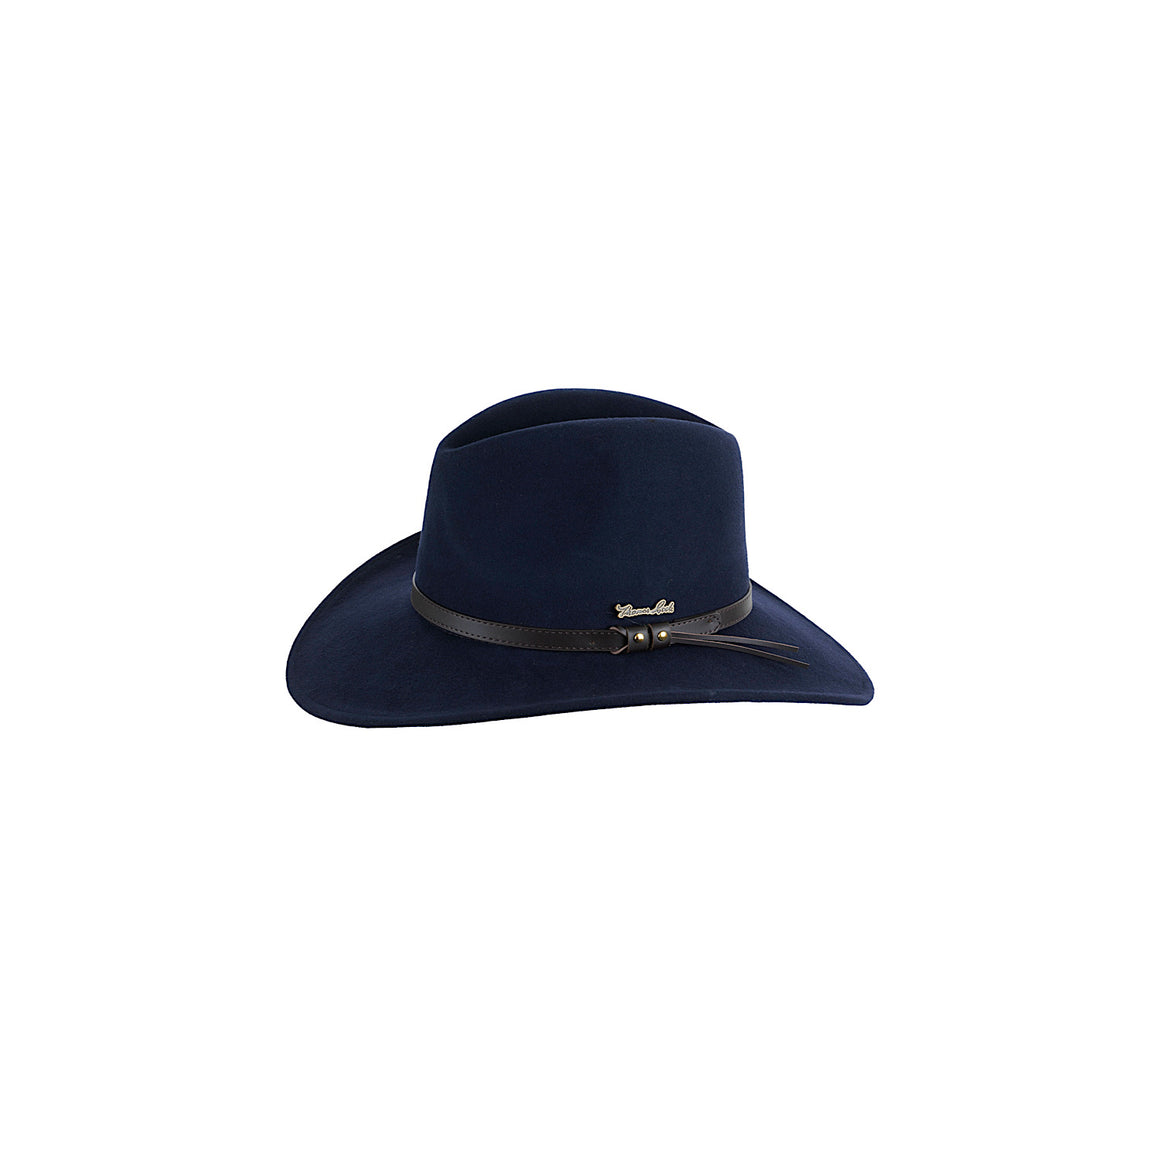 Thomas Cook Original Crushable Hat Navy